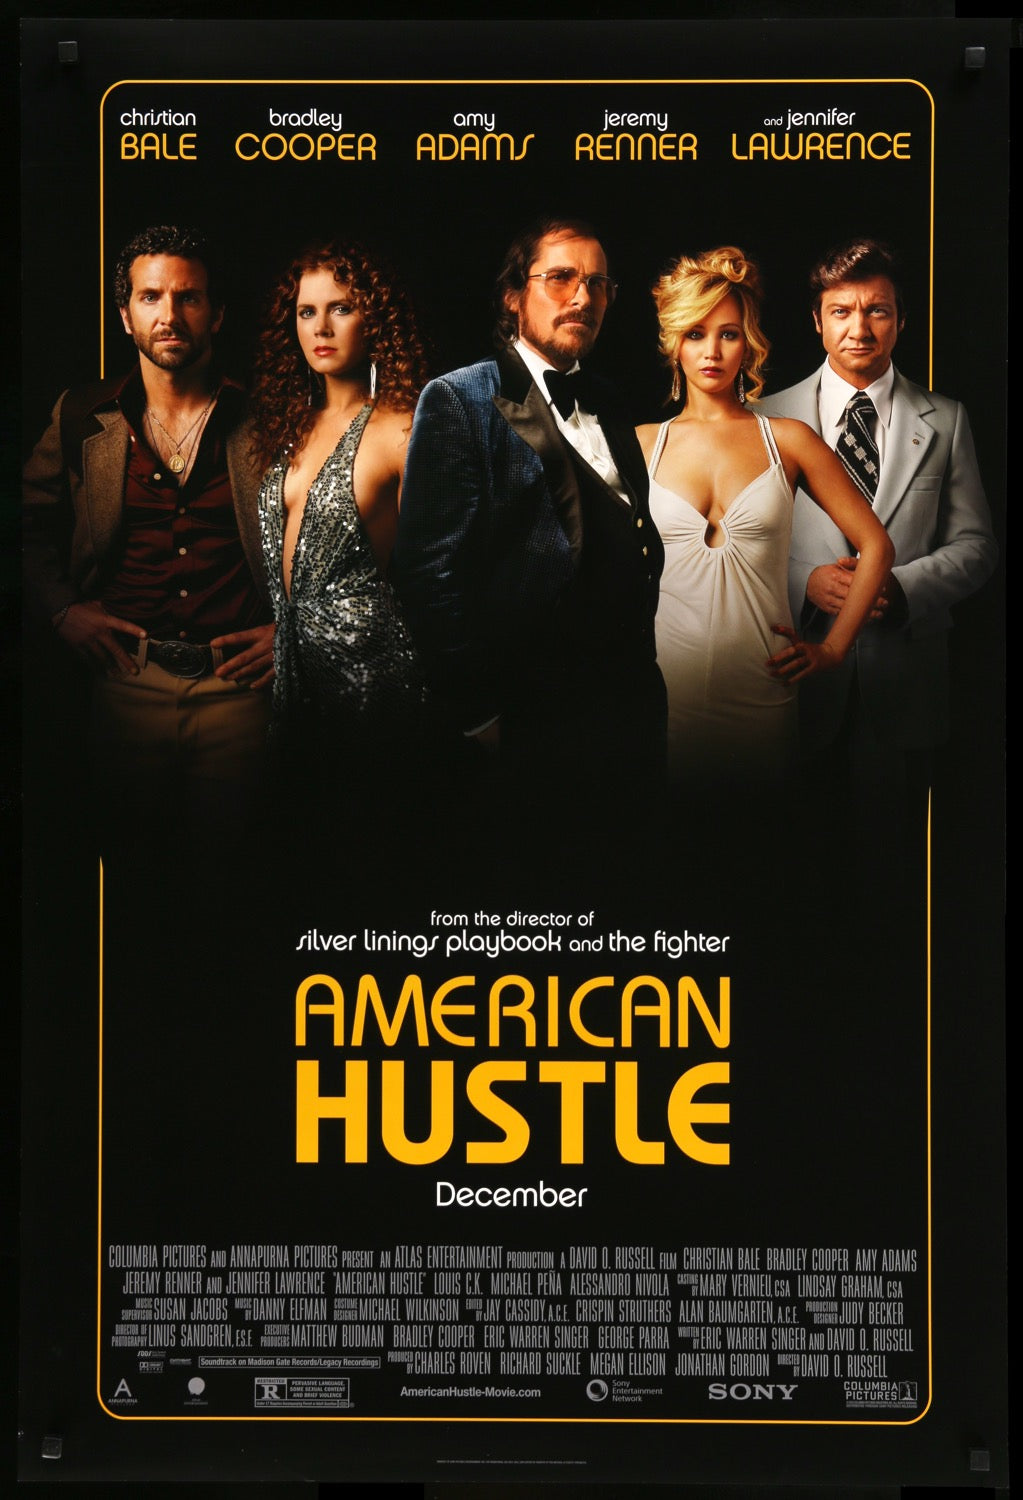 American Hustle (2013) original movie poster for sale at Original Film Art